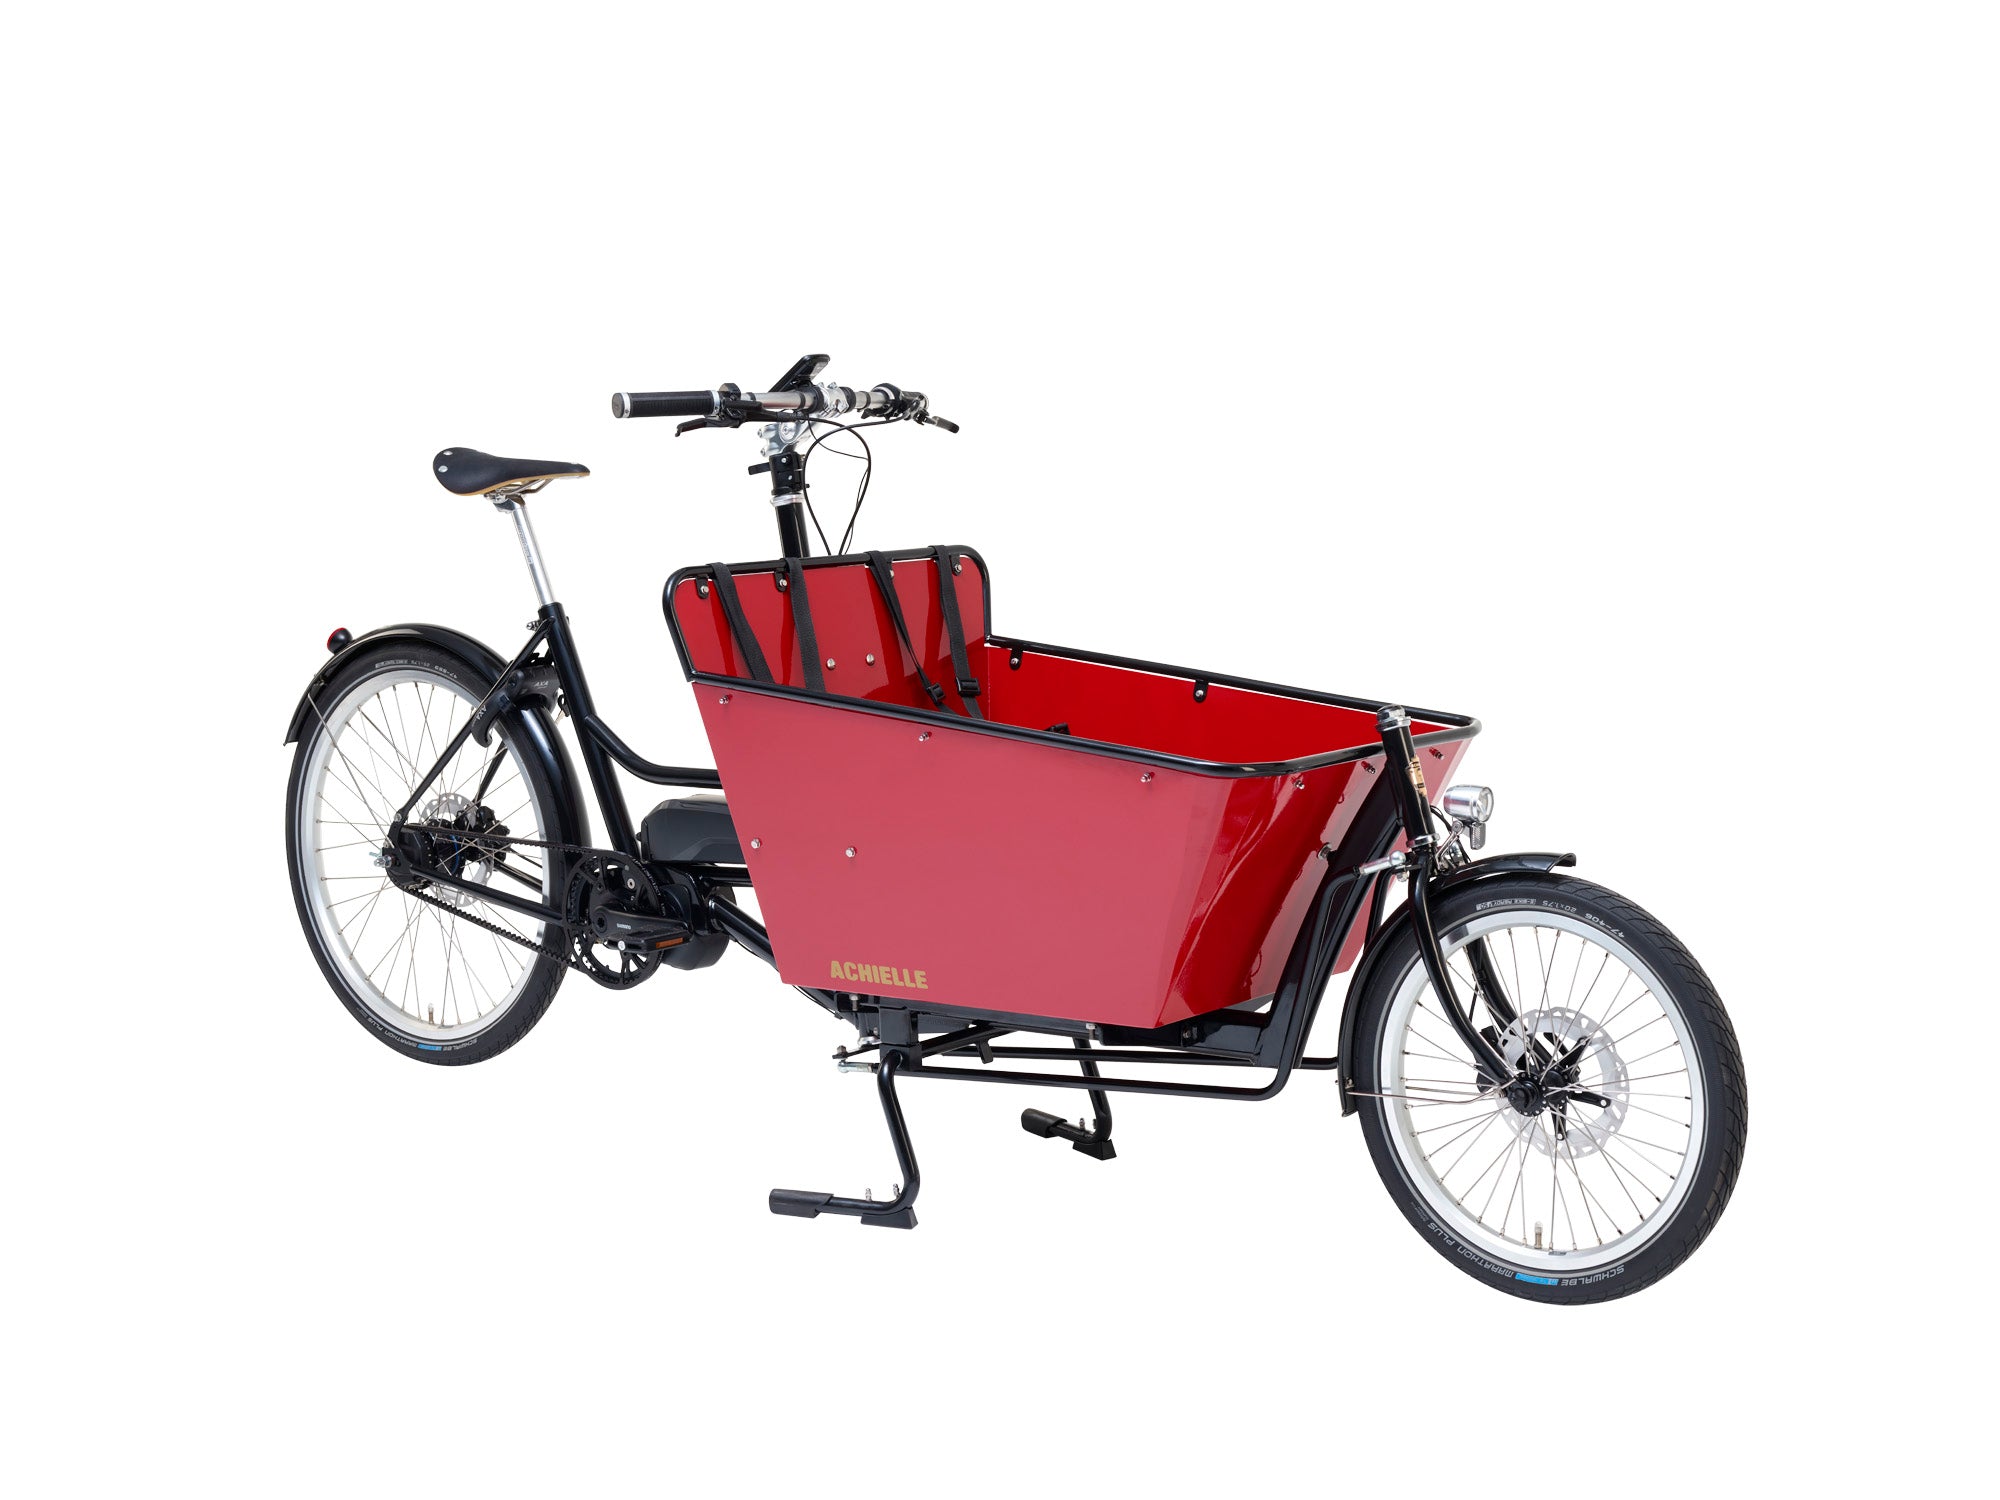 Achielle Ferre "vintage looking" e-cargo bike